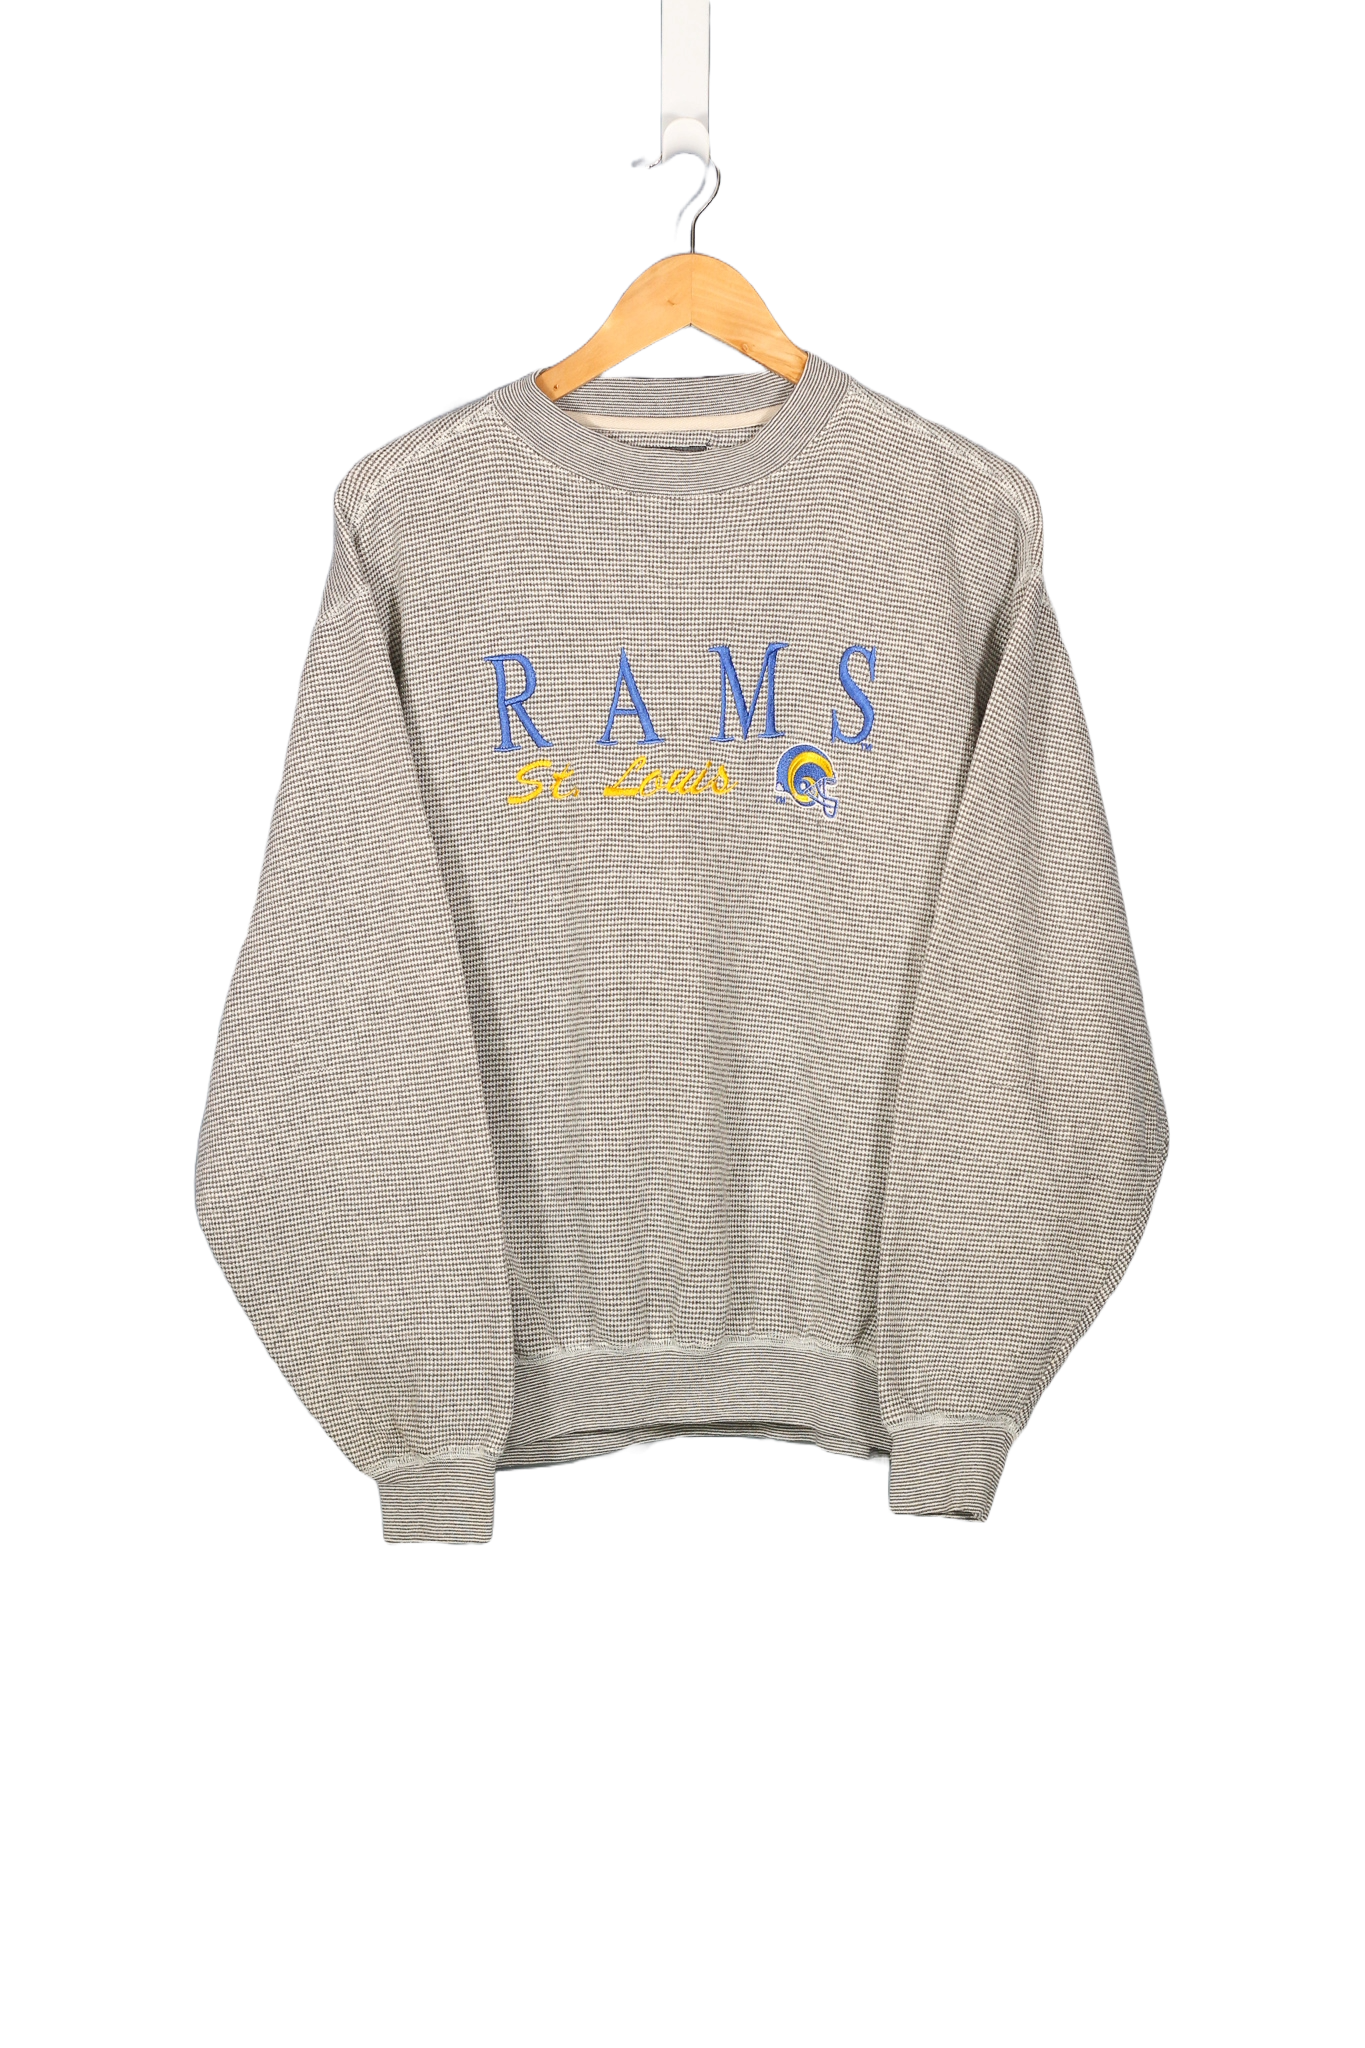 Vintage St. Louis Rams Embroidered NFL Crewneck - M